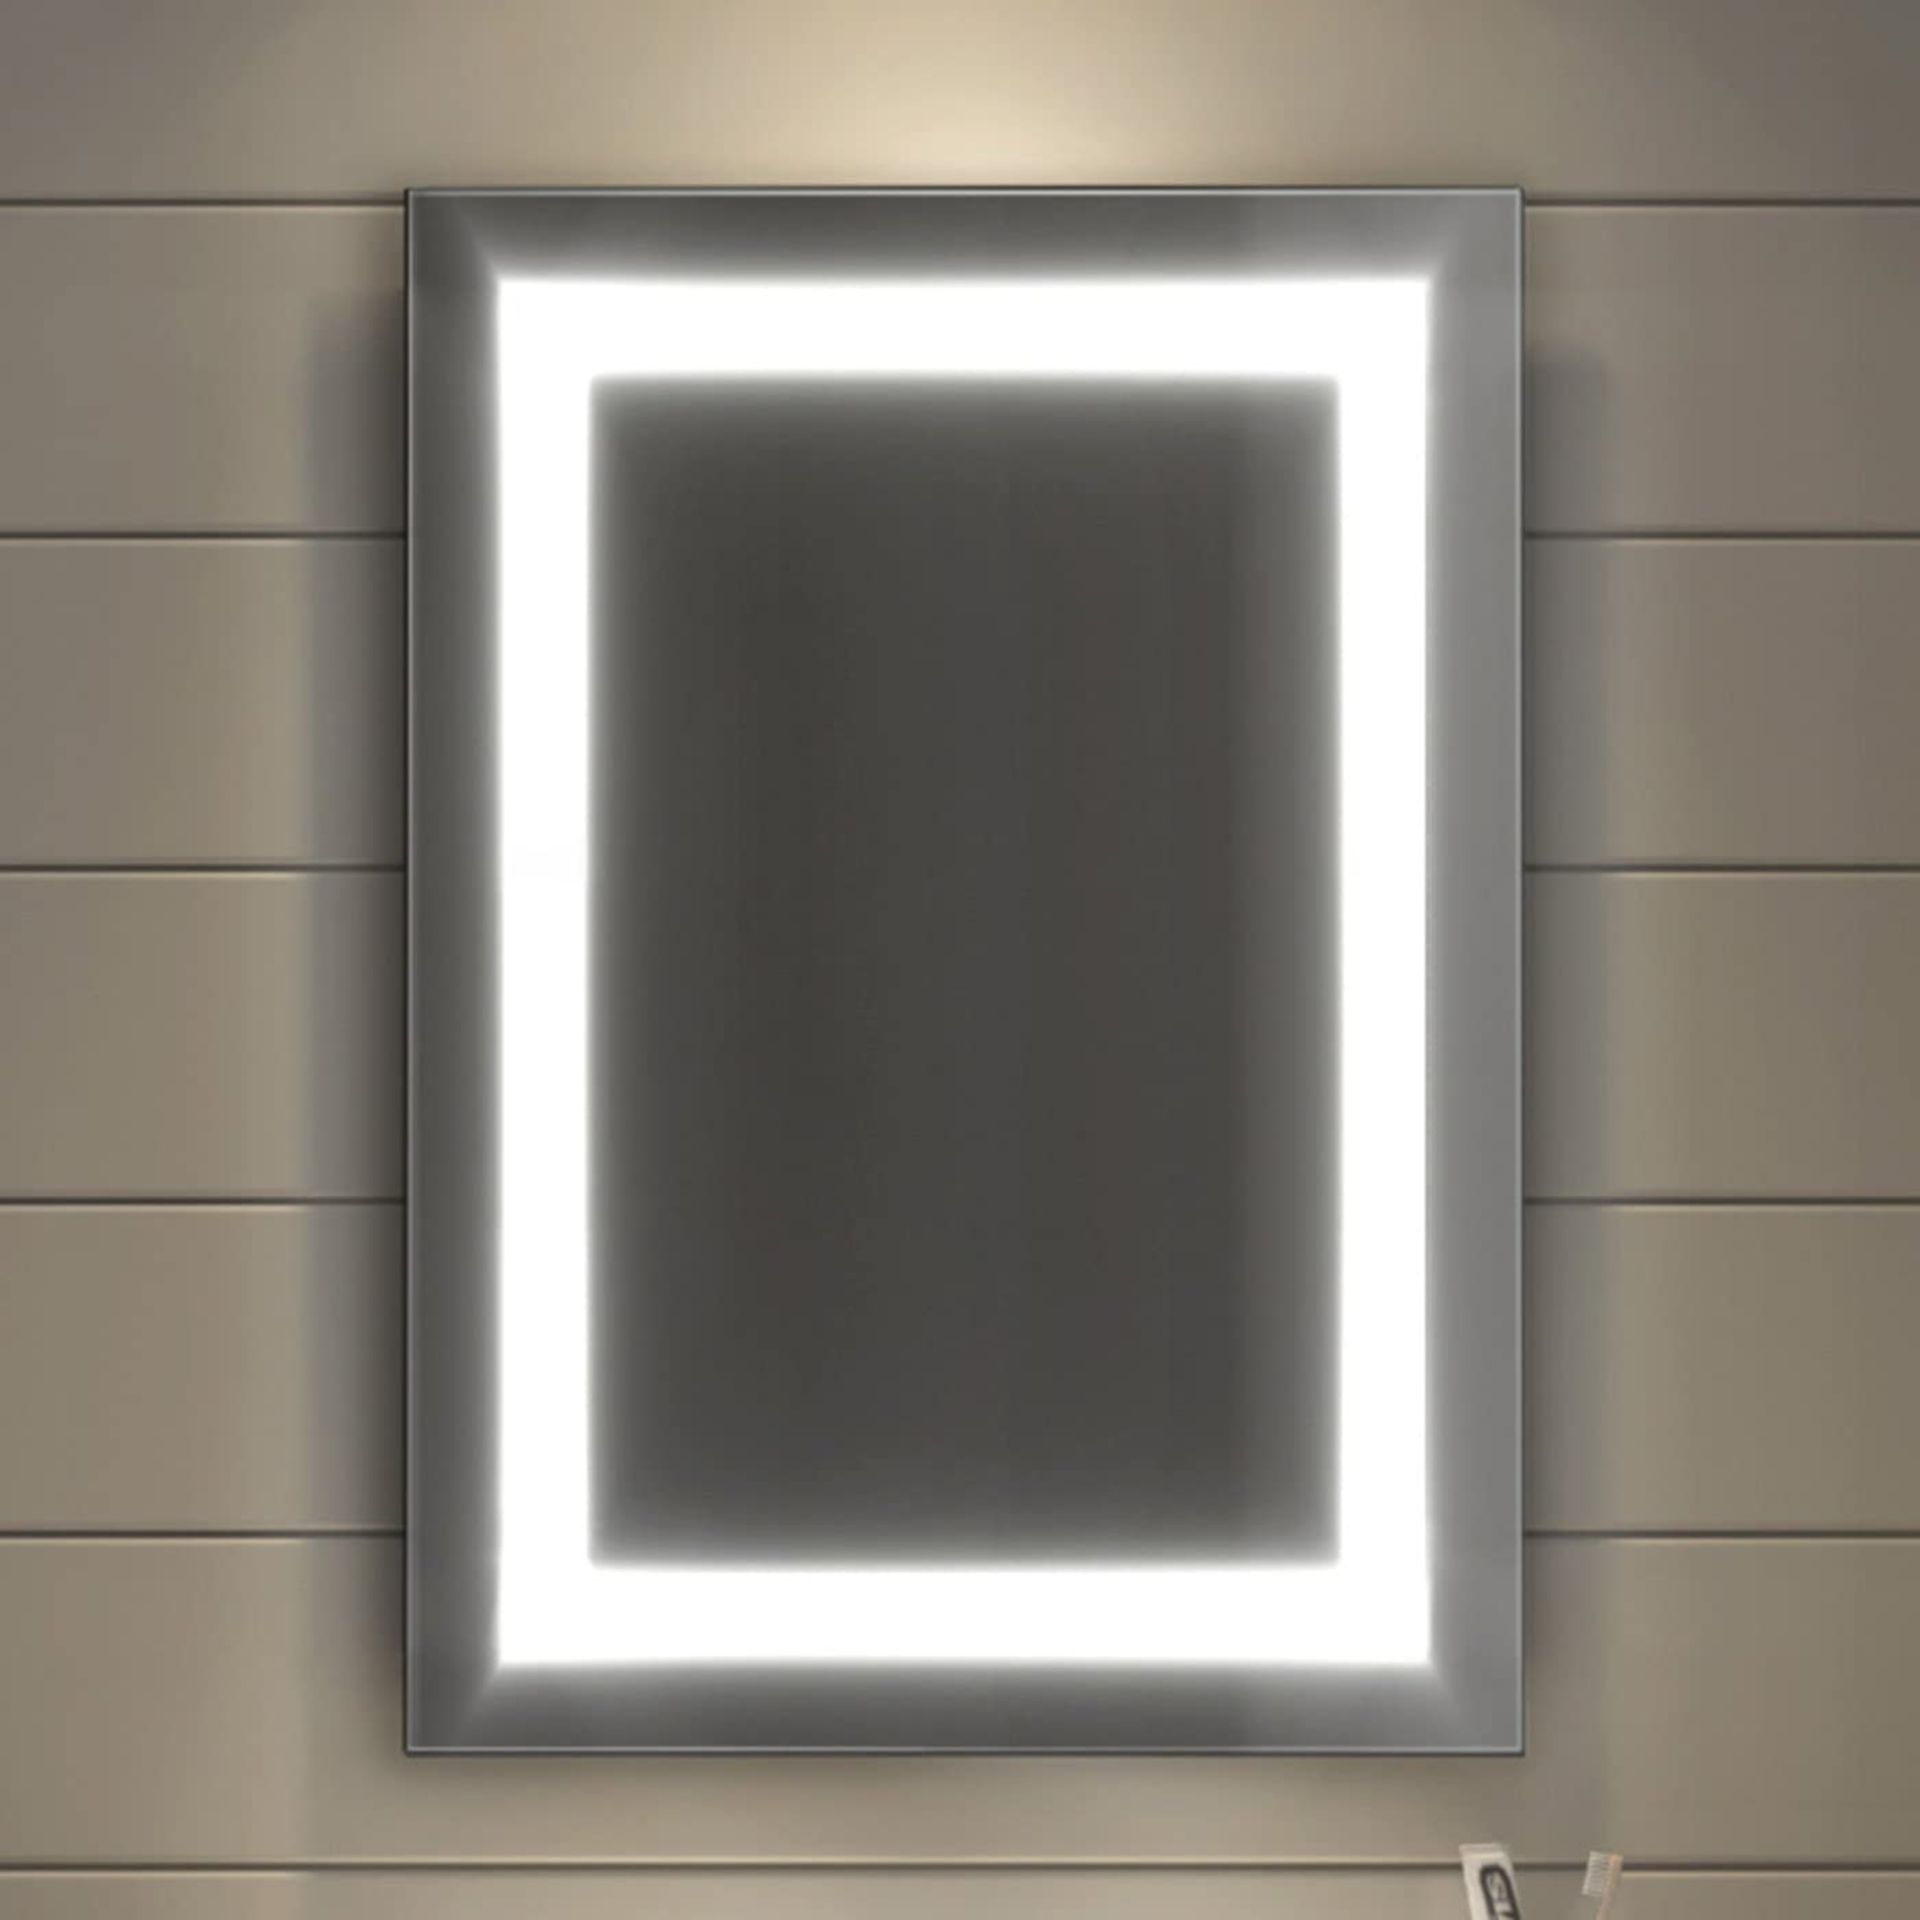 New & Boxed 500x700mm Modern Illuminated Backlit Led Light Bathroom Mirror + Demister Pad.